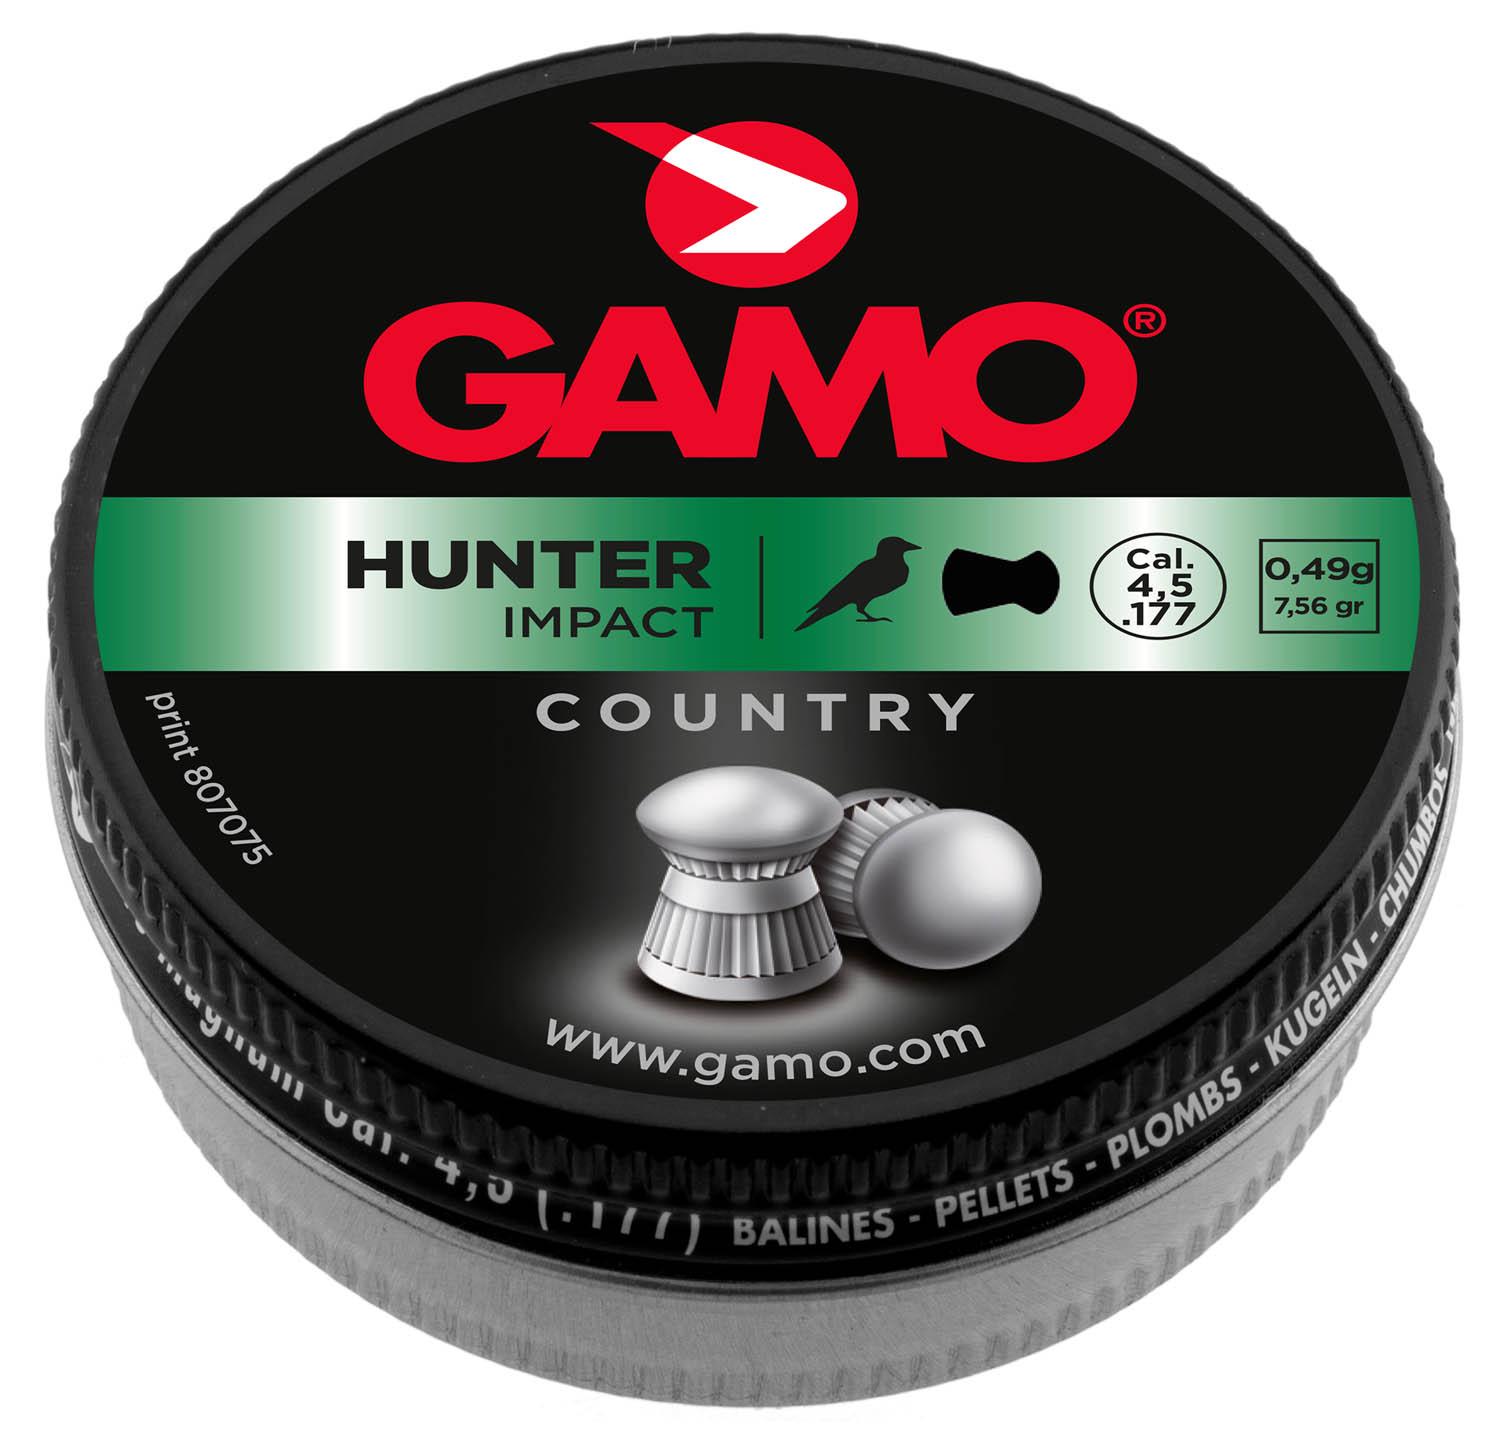 Balines Gamo Hunter (5,5mm) 